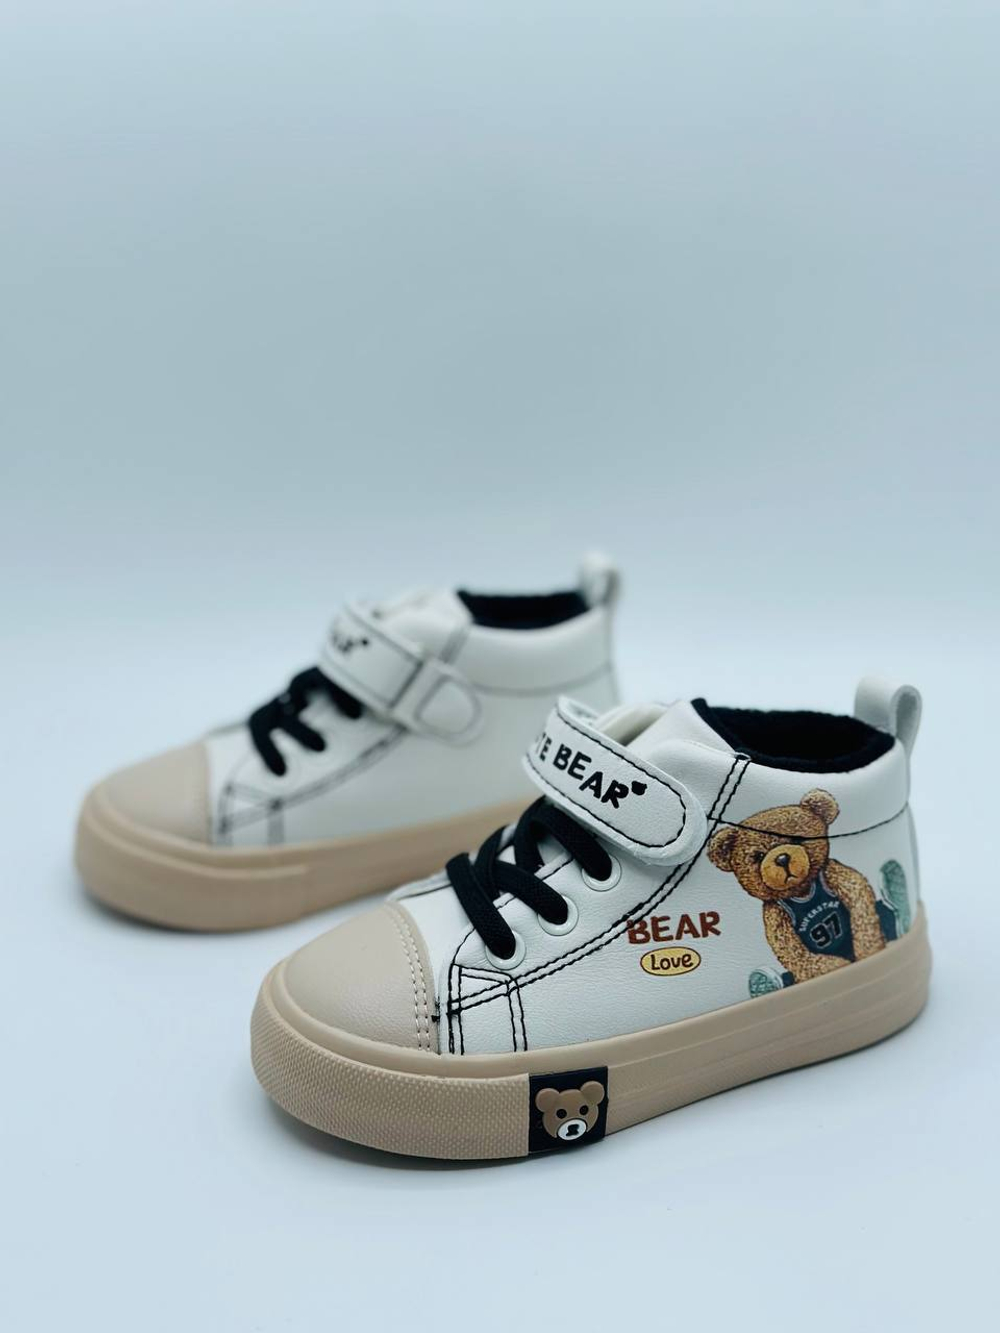 Кроссовки для детей Buba Bear Love